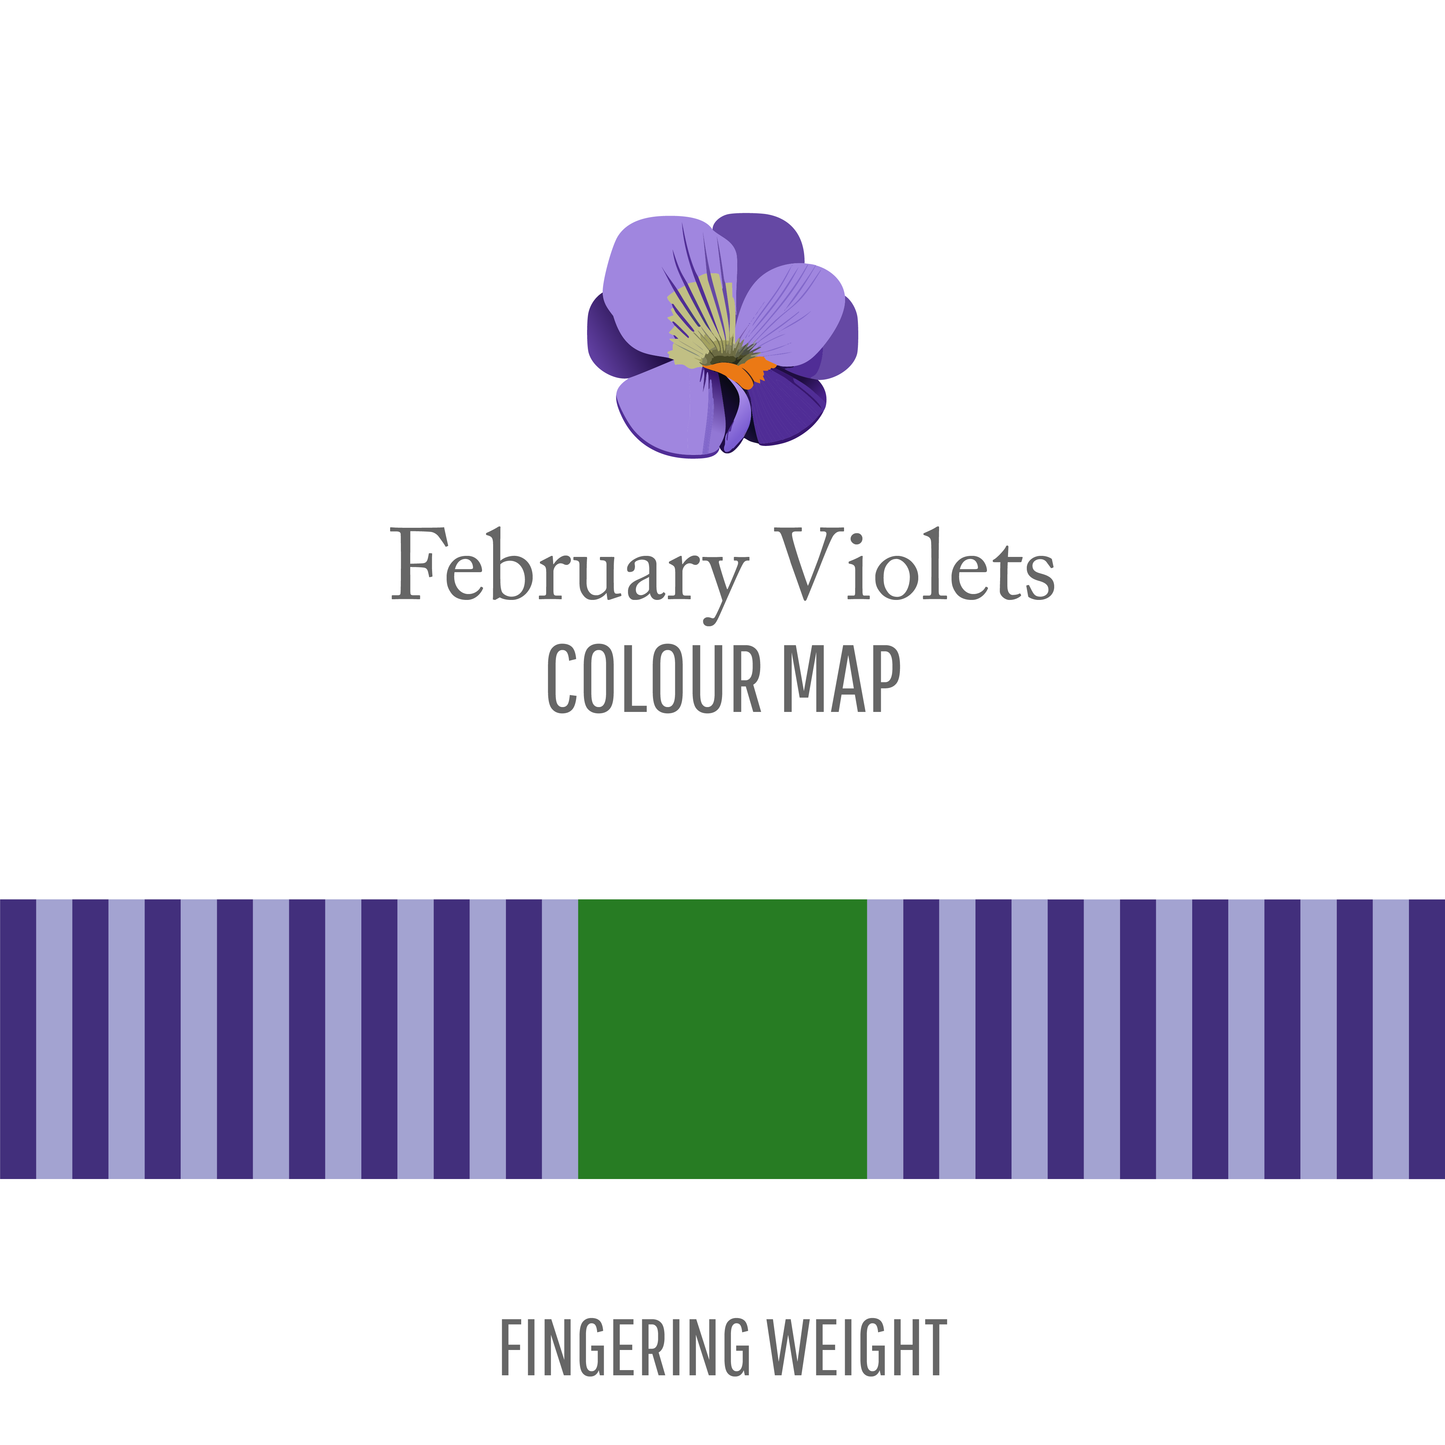 February Violets